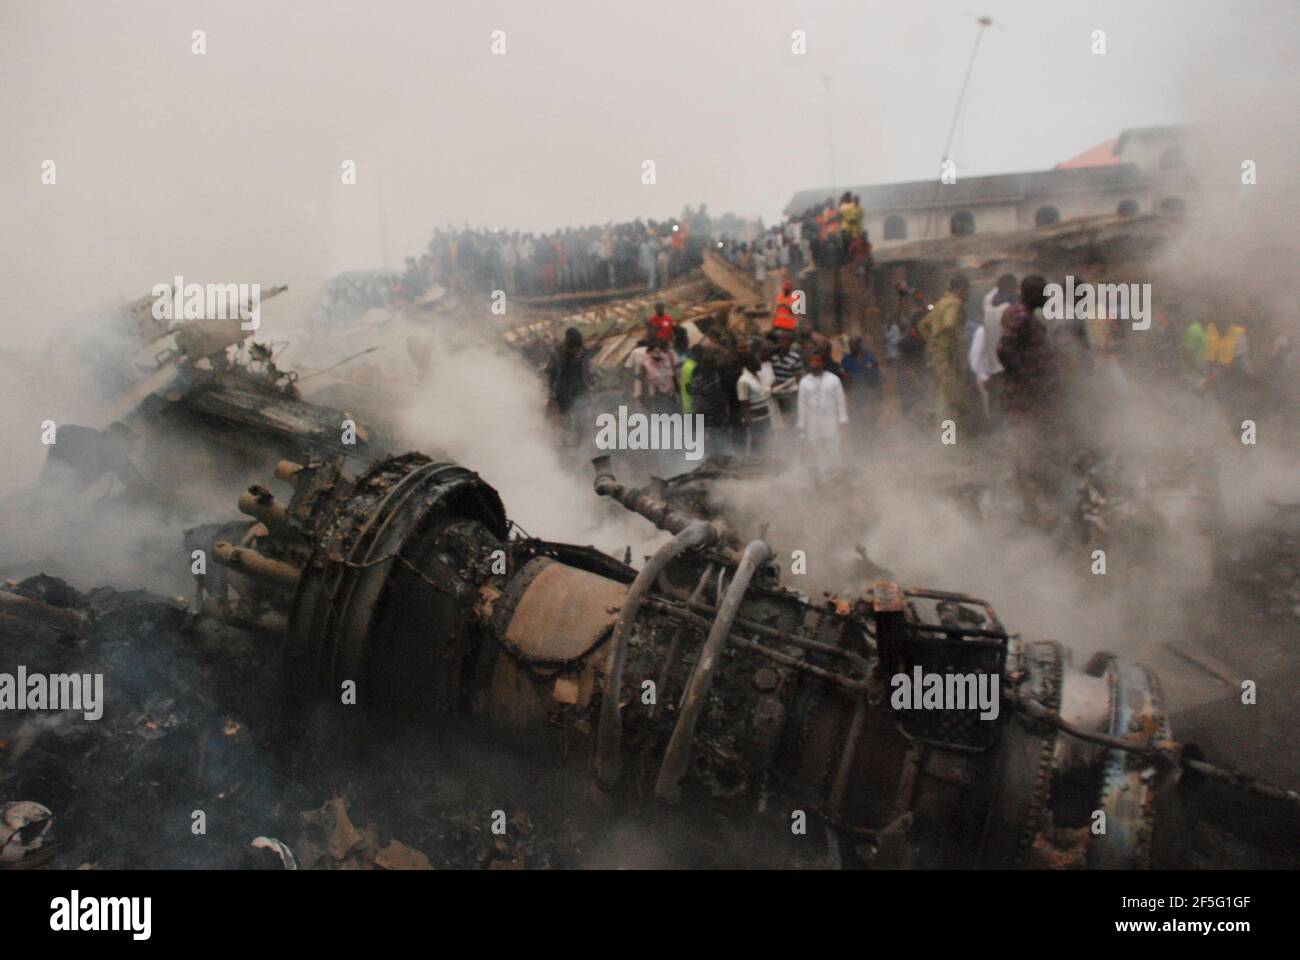 Dana avion Crash: Équipe de sauvetage sur le site de l'accident, Iju-Ishaga, Lagos State, Nigeria. Banque D'Images